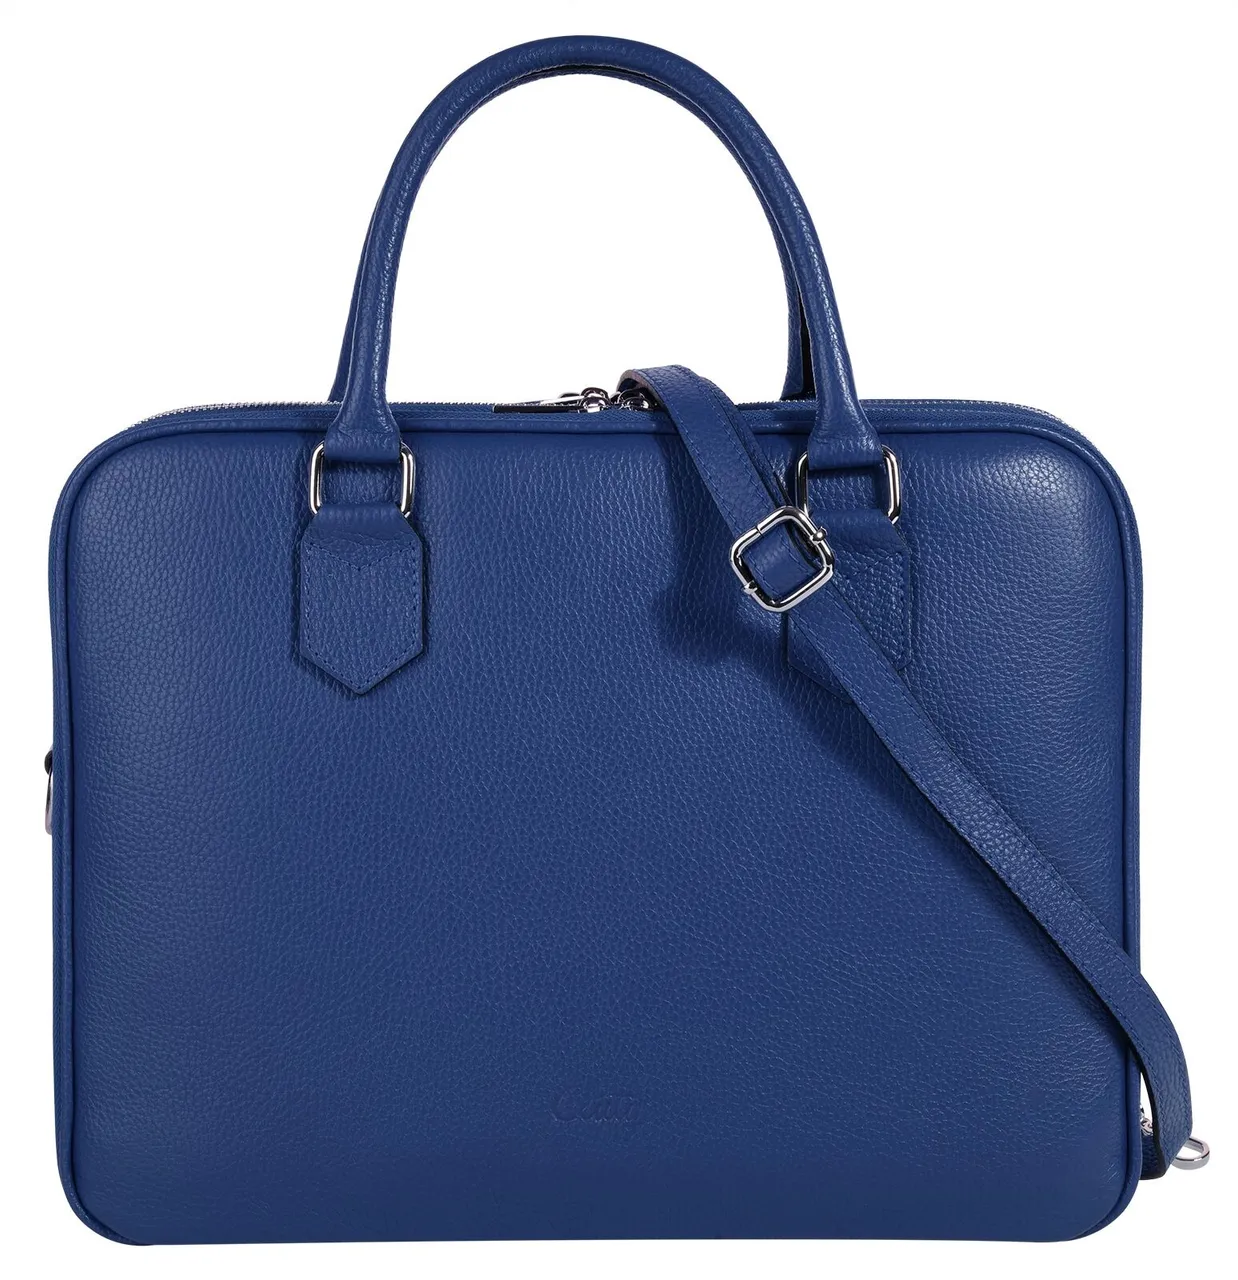 Aktentasche CLUTY Gr. B/H/T: 35 cm x 28 cm x 13 cm onesize, blau Damen Taschen Aktenkoffer echt Leder, Made in Italy